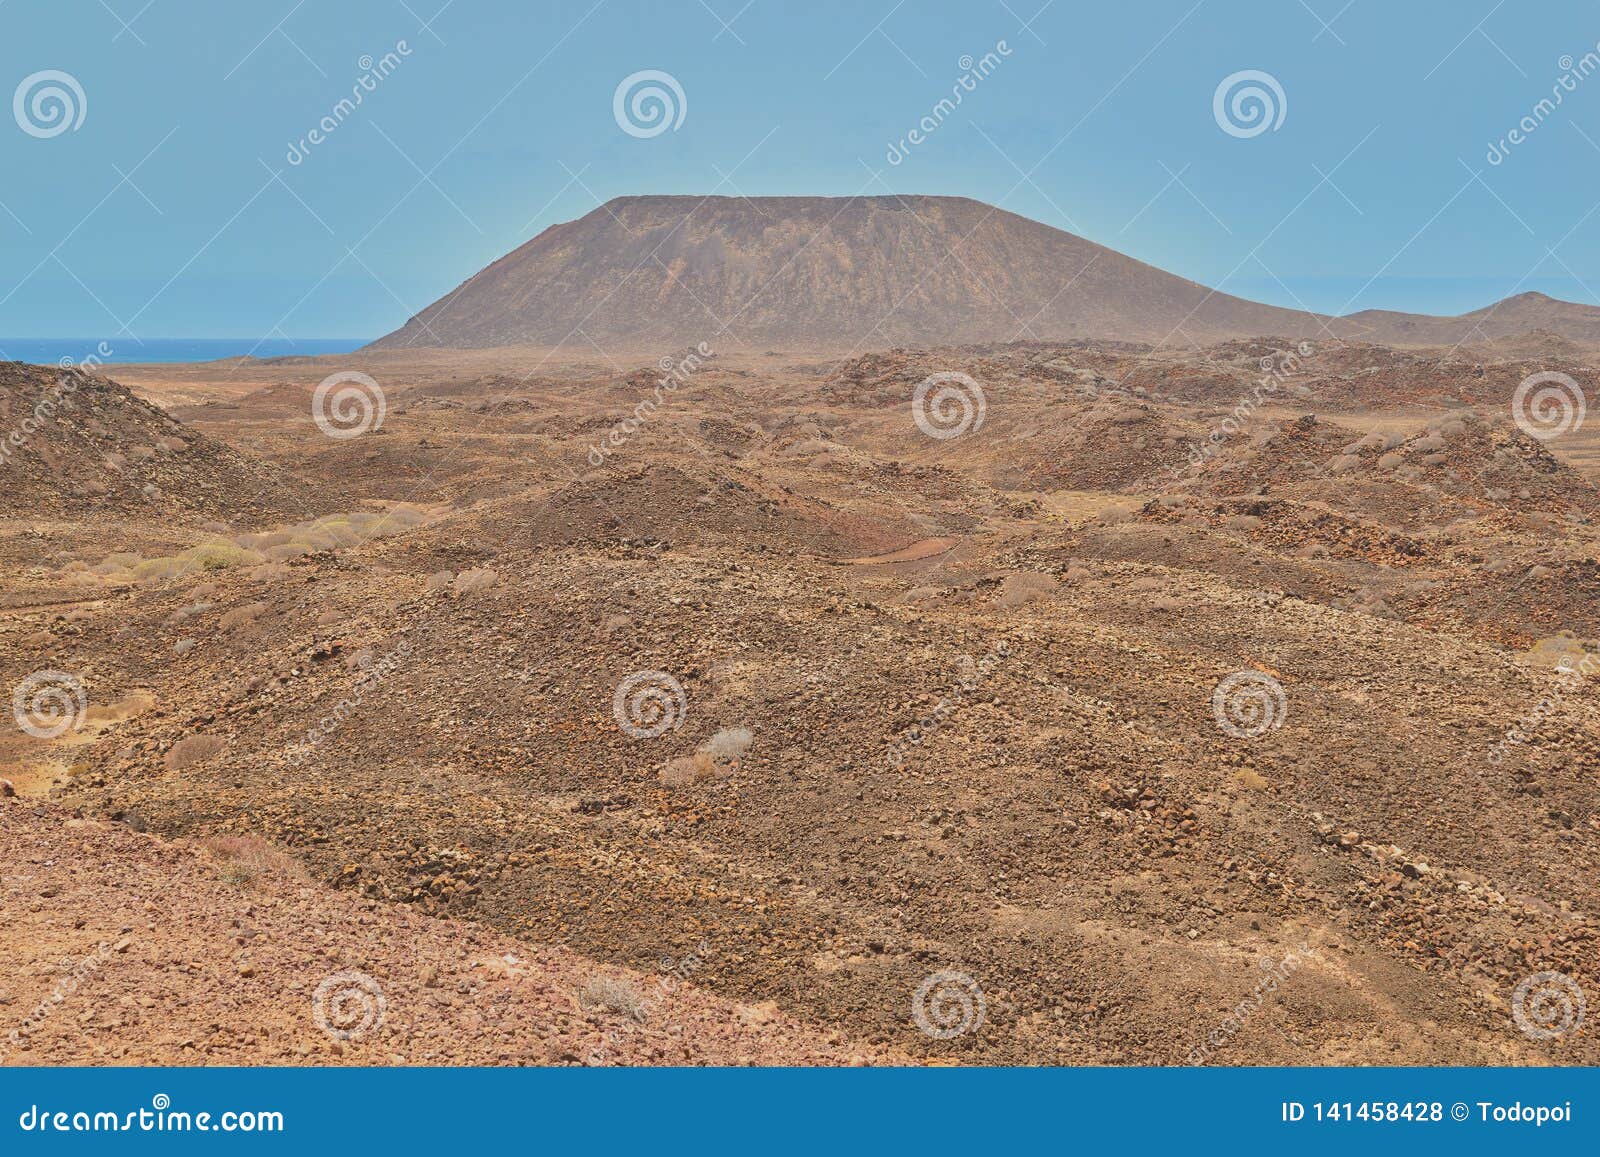 beautiful view of mountain and dunes on isla de lobos, fuerteventura